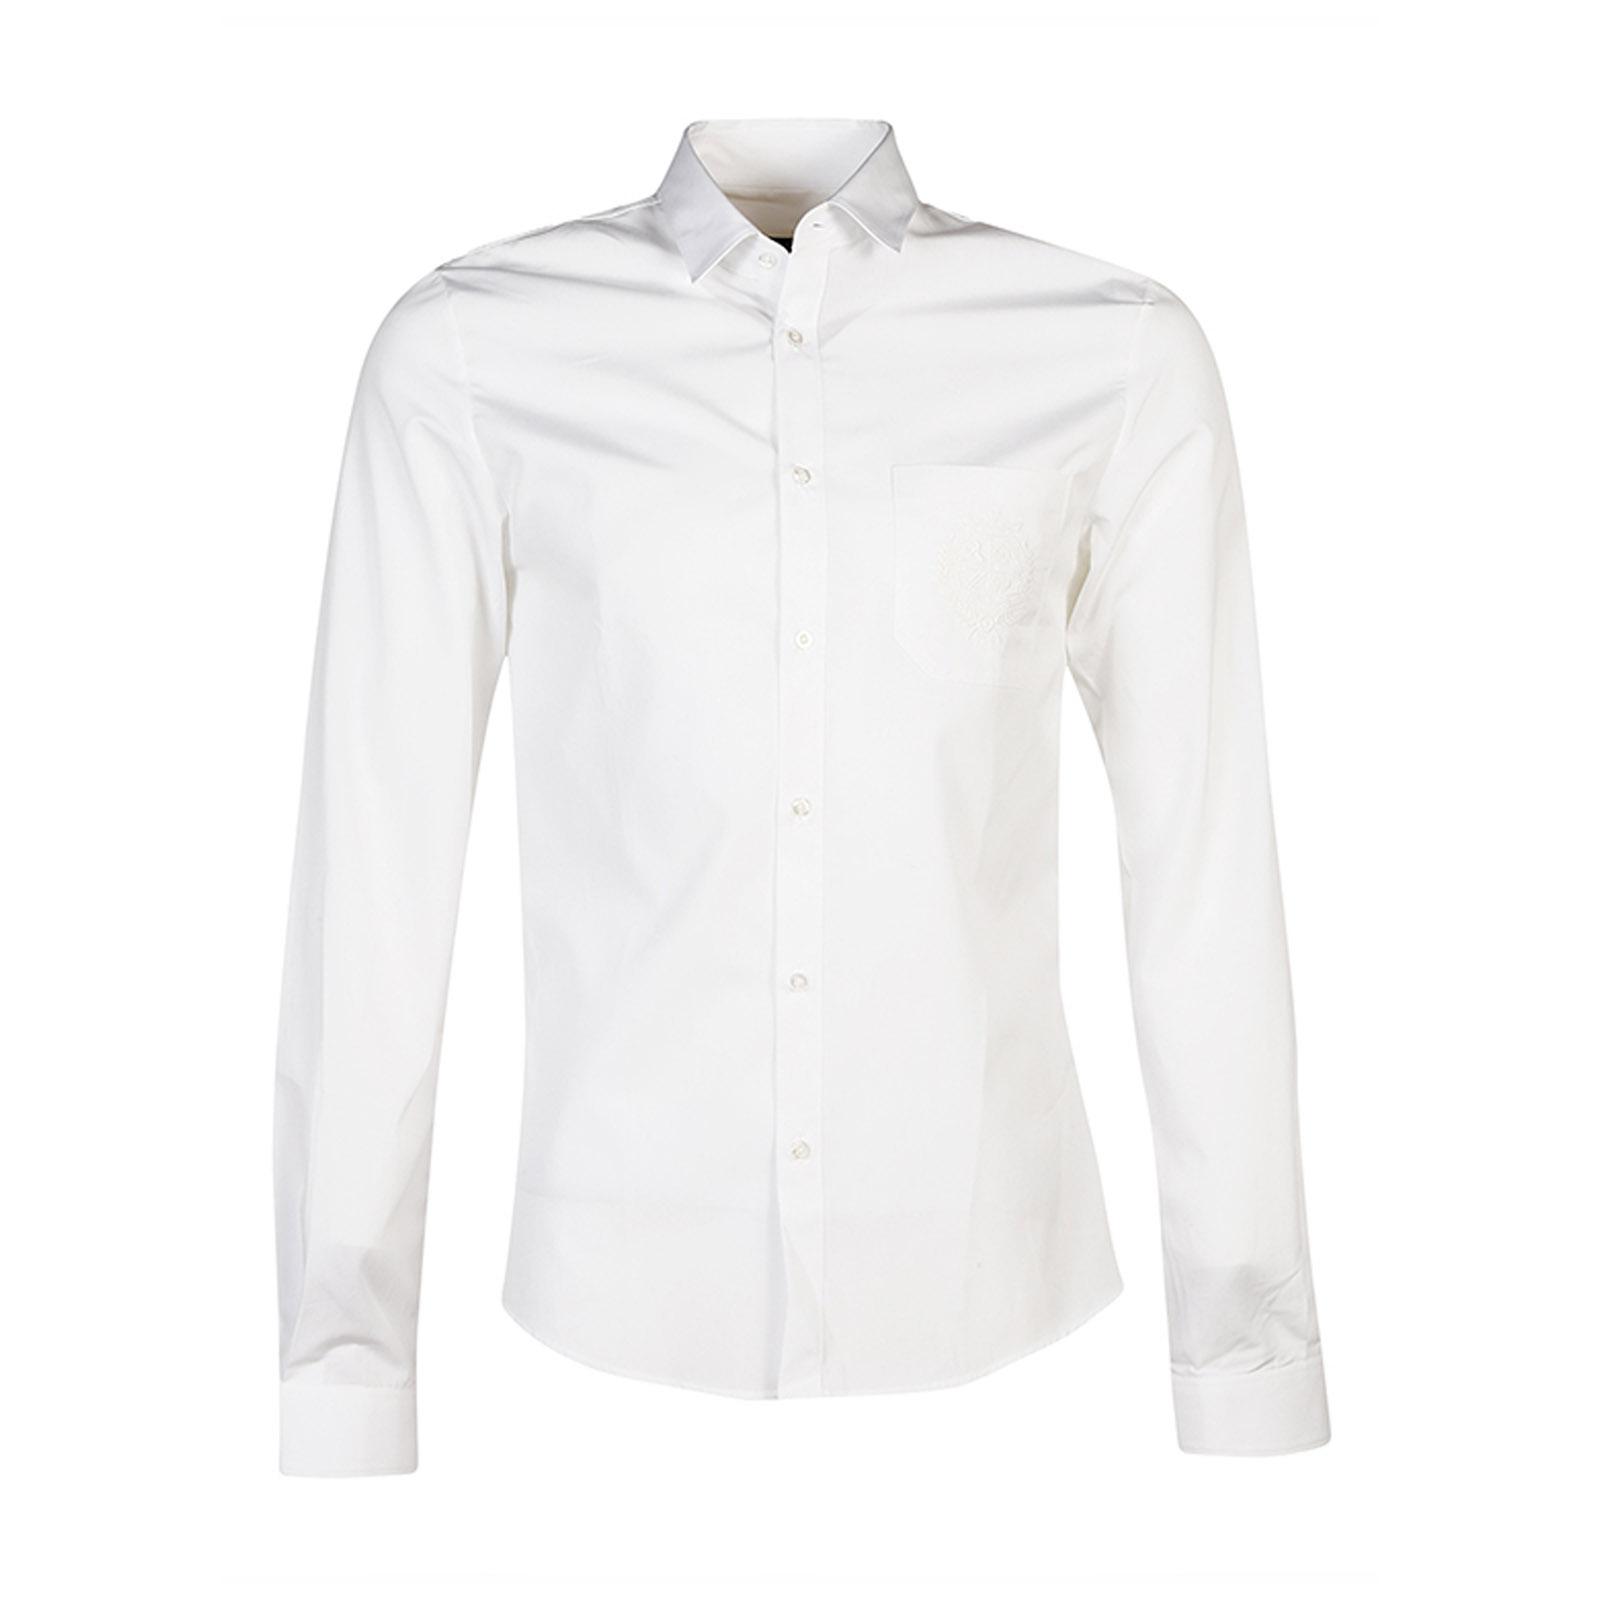 Gucci Long Sleeve Shirt Dress Shirt in White for Men - Lyst